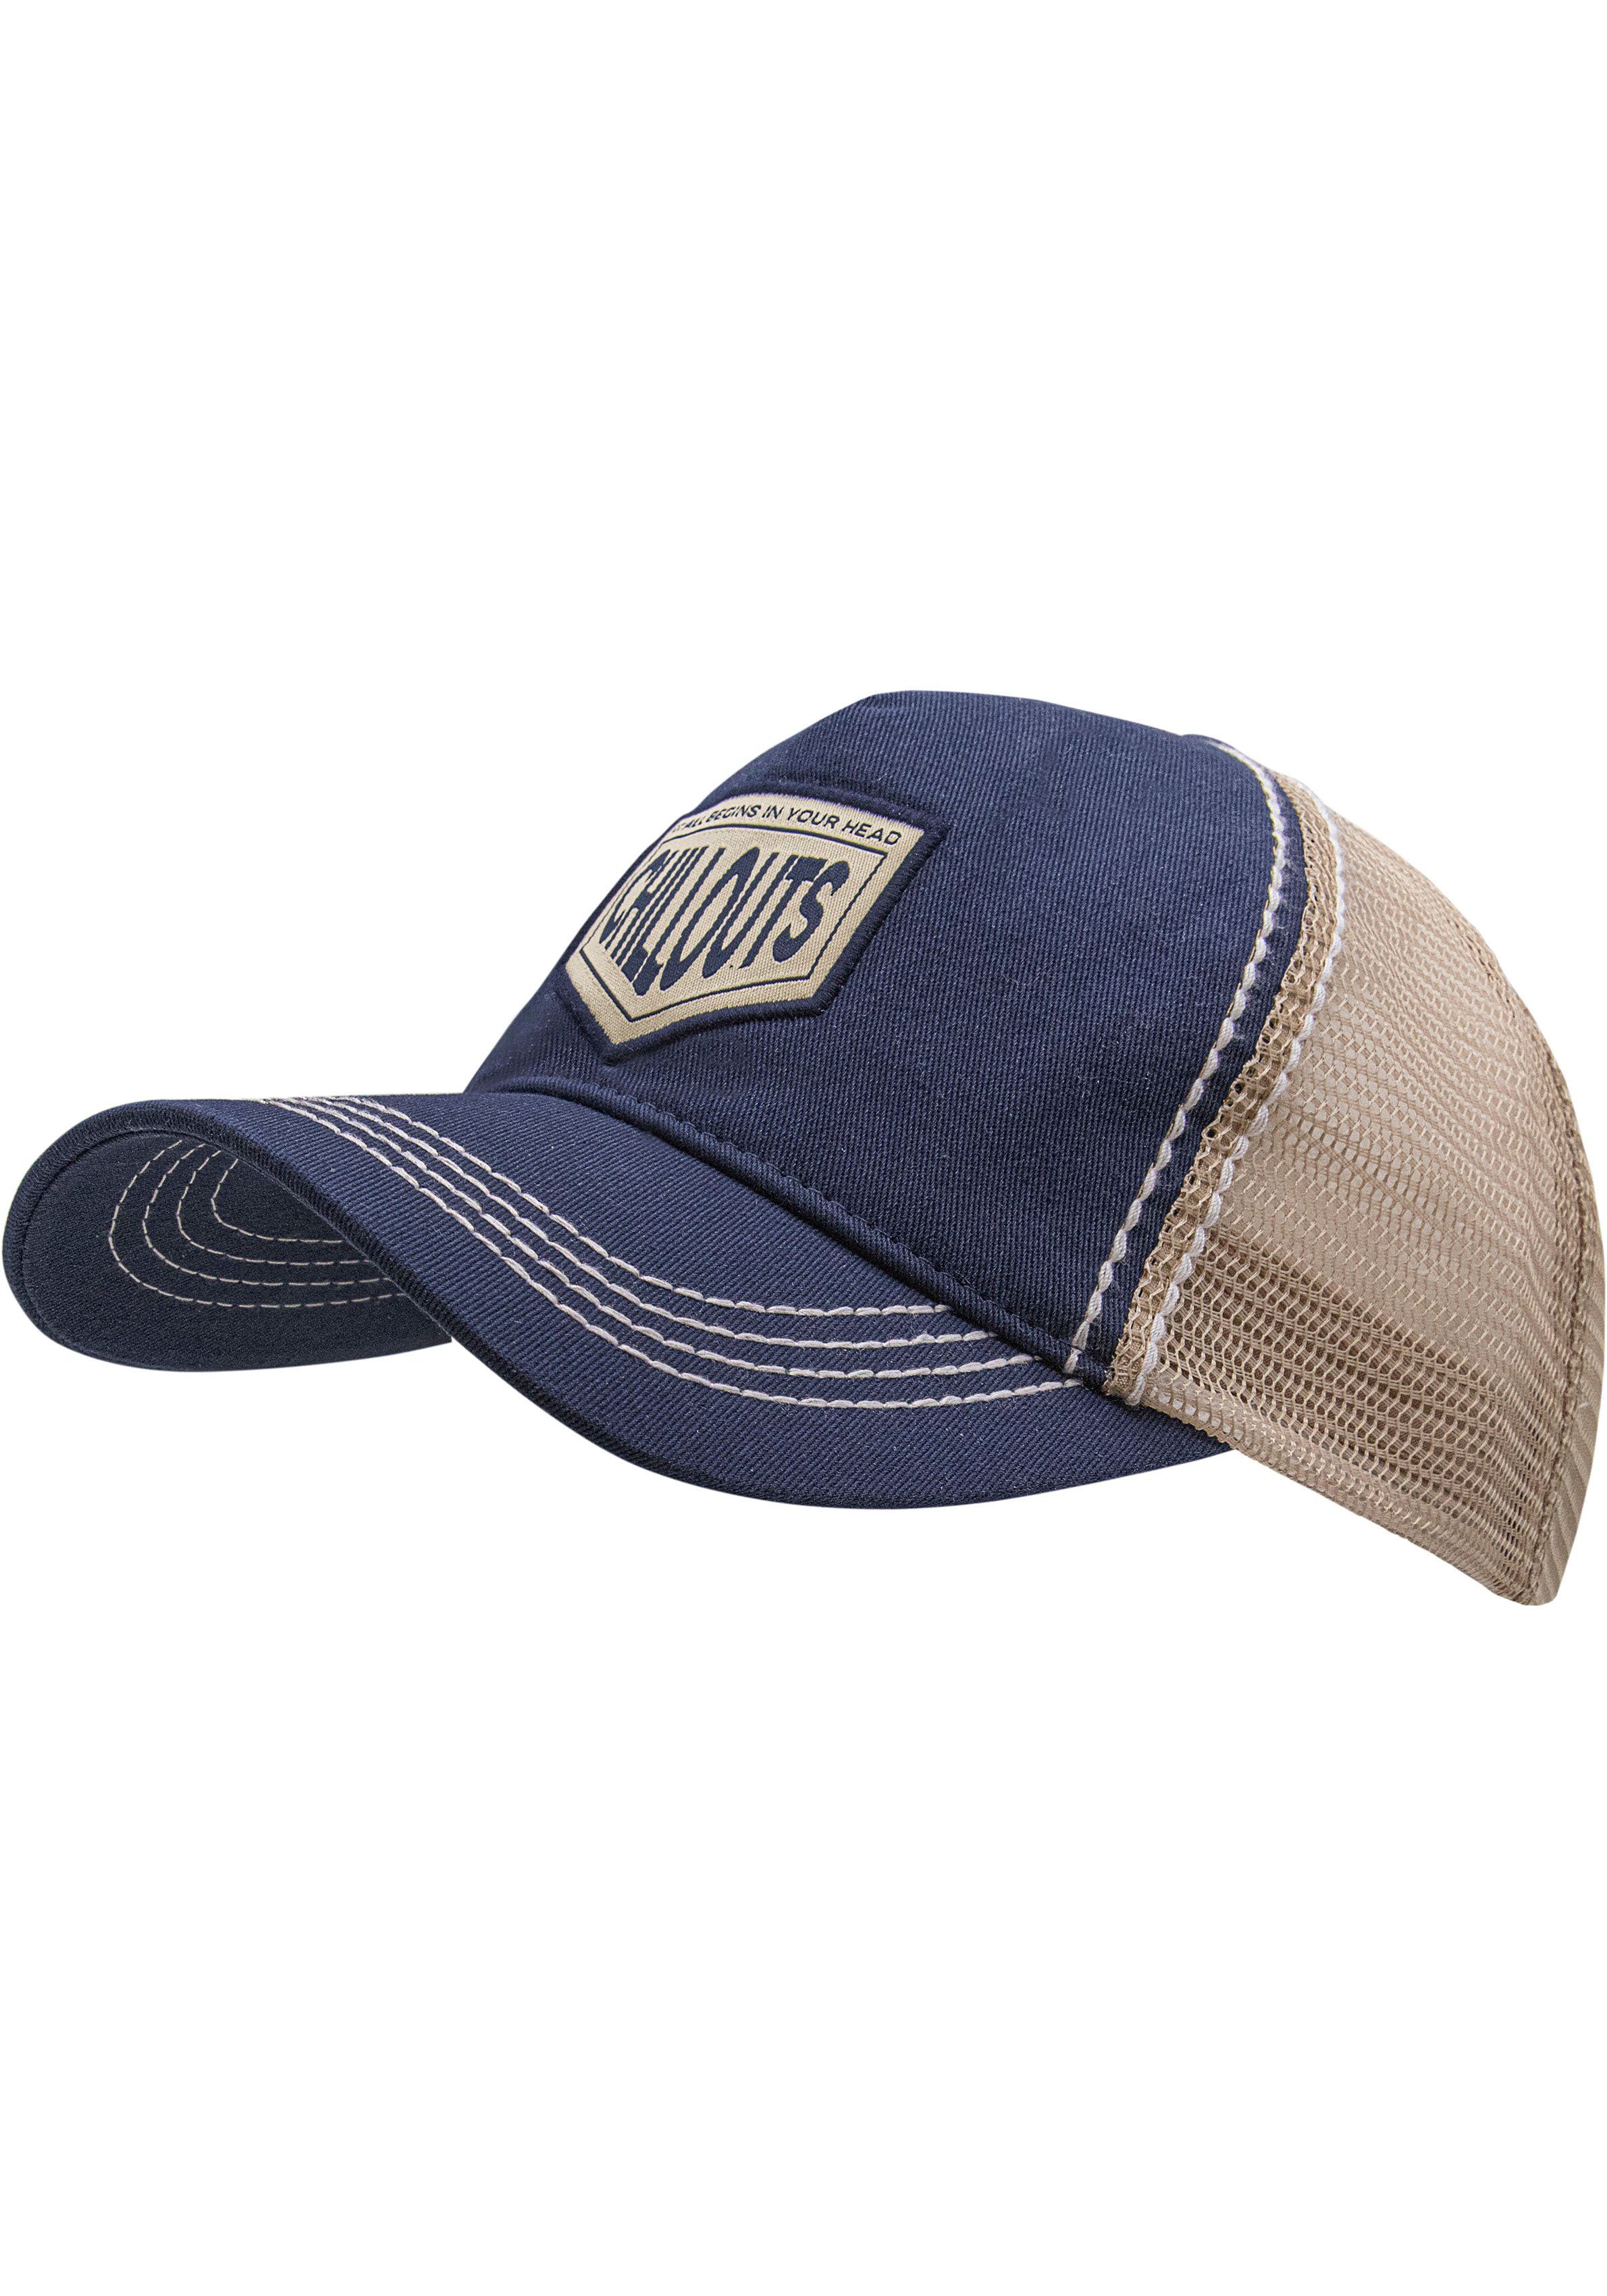 chillouts Baseball Hat Cap Portsmouth marine